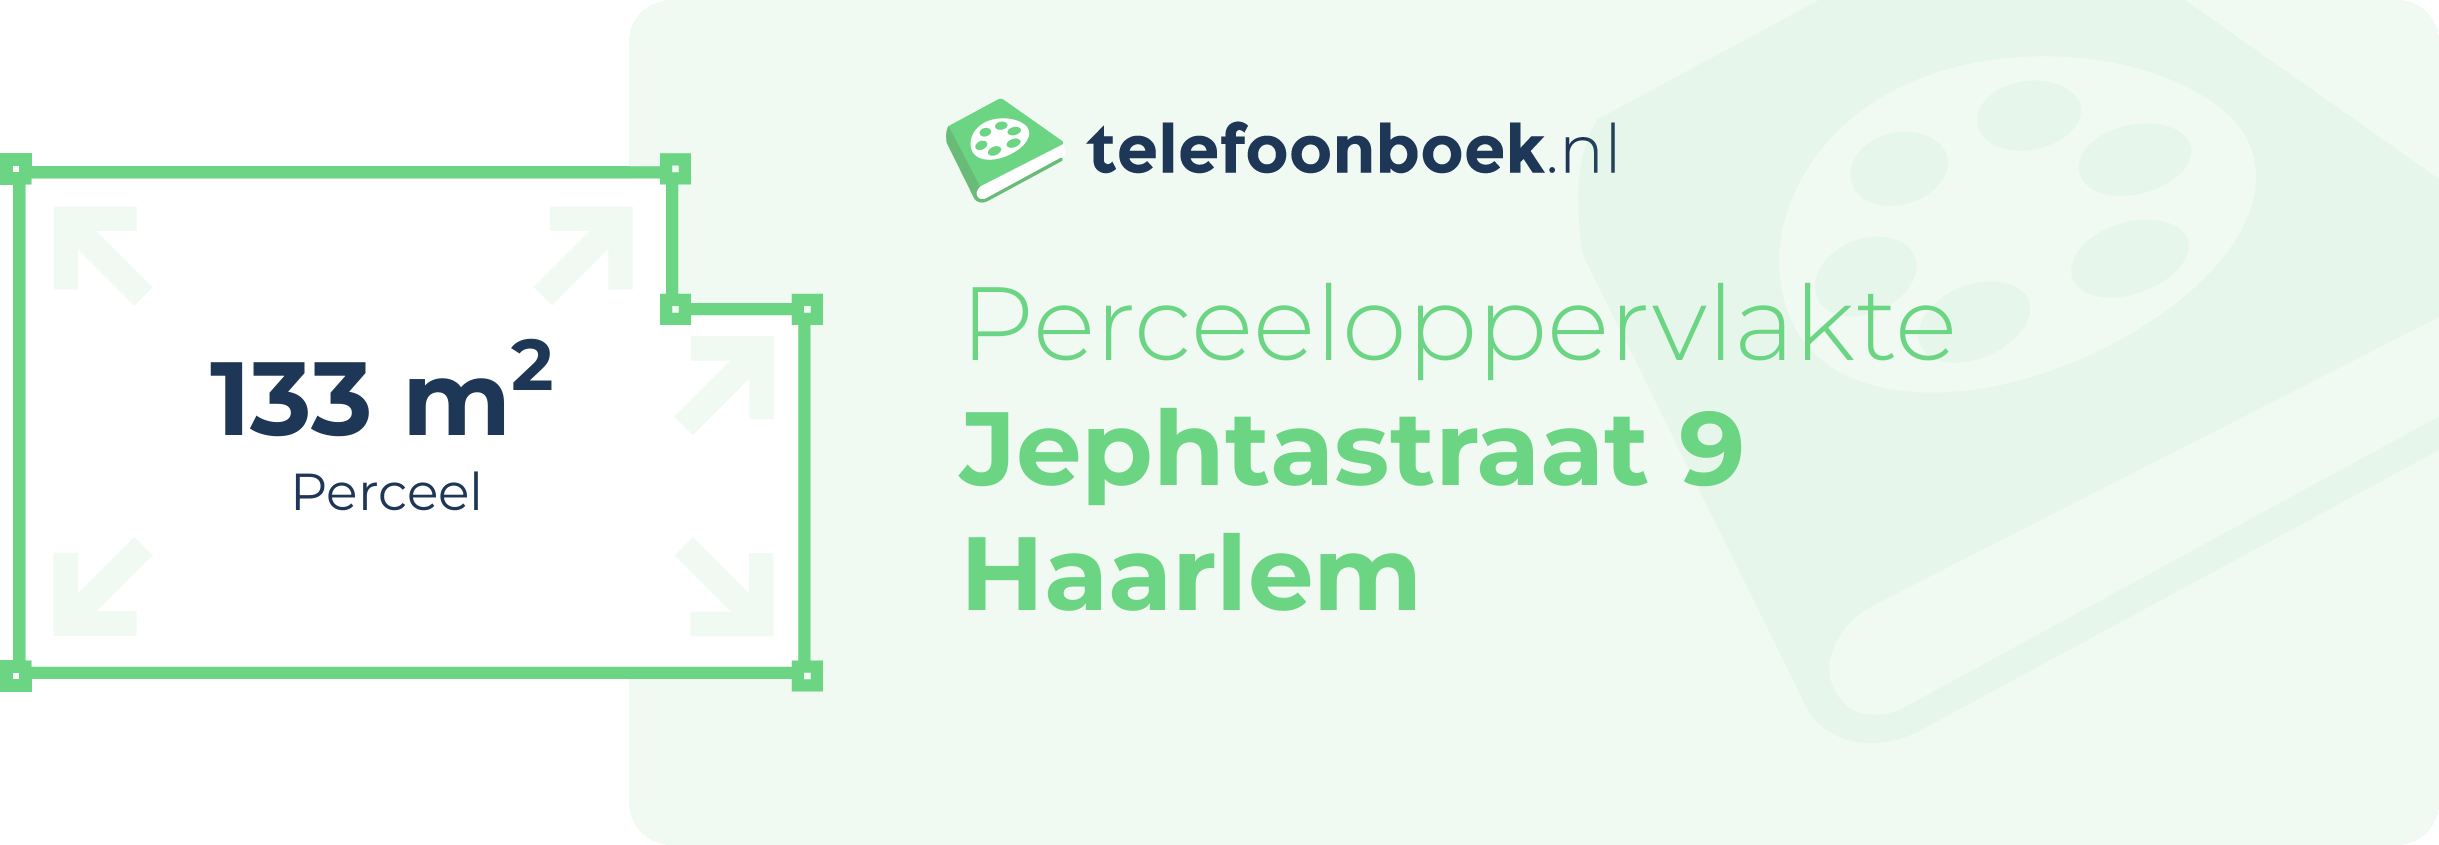 Perceeloppervlakte Jephtastraat 9 Haarlem